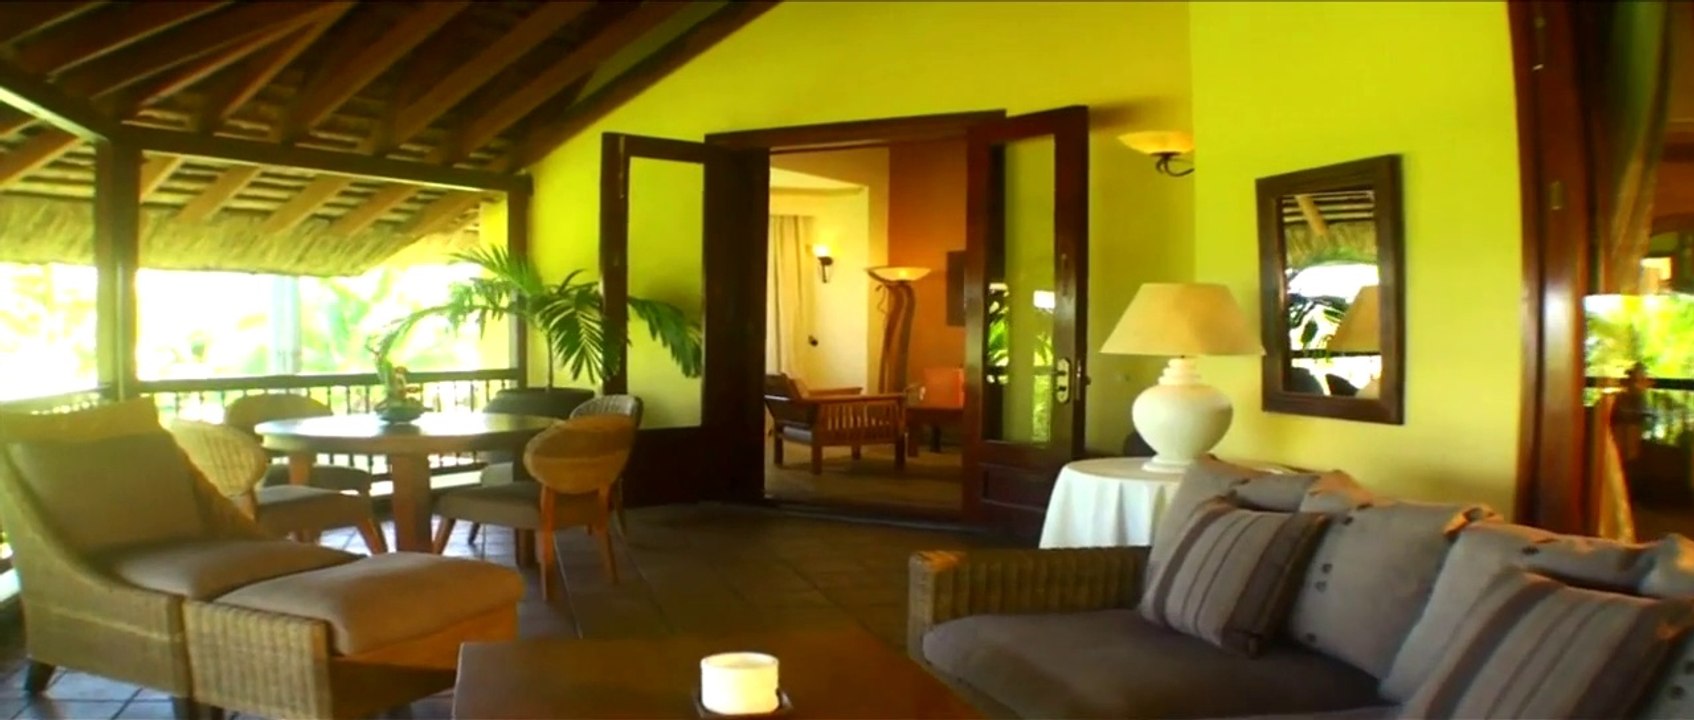 Luxushotel Strandhotel Traumurlaub  Dinarobin Hotel Golf & Spa - Mauritius - Club Family Suite